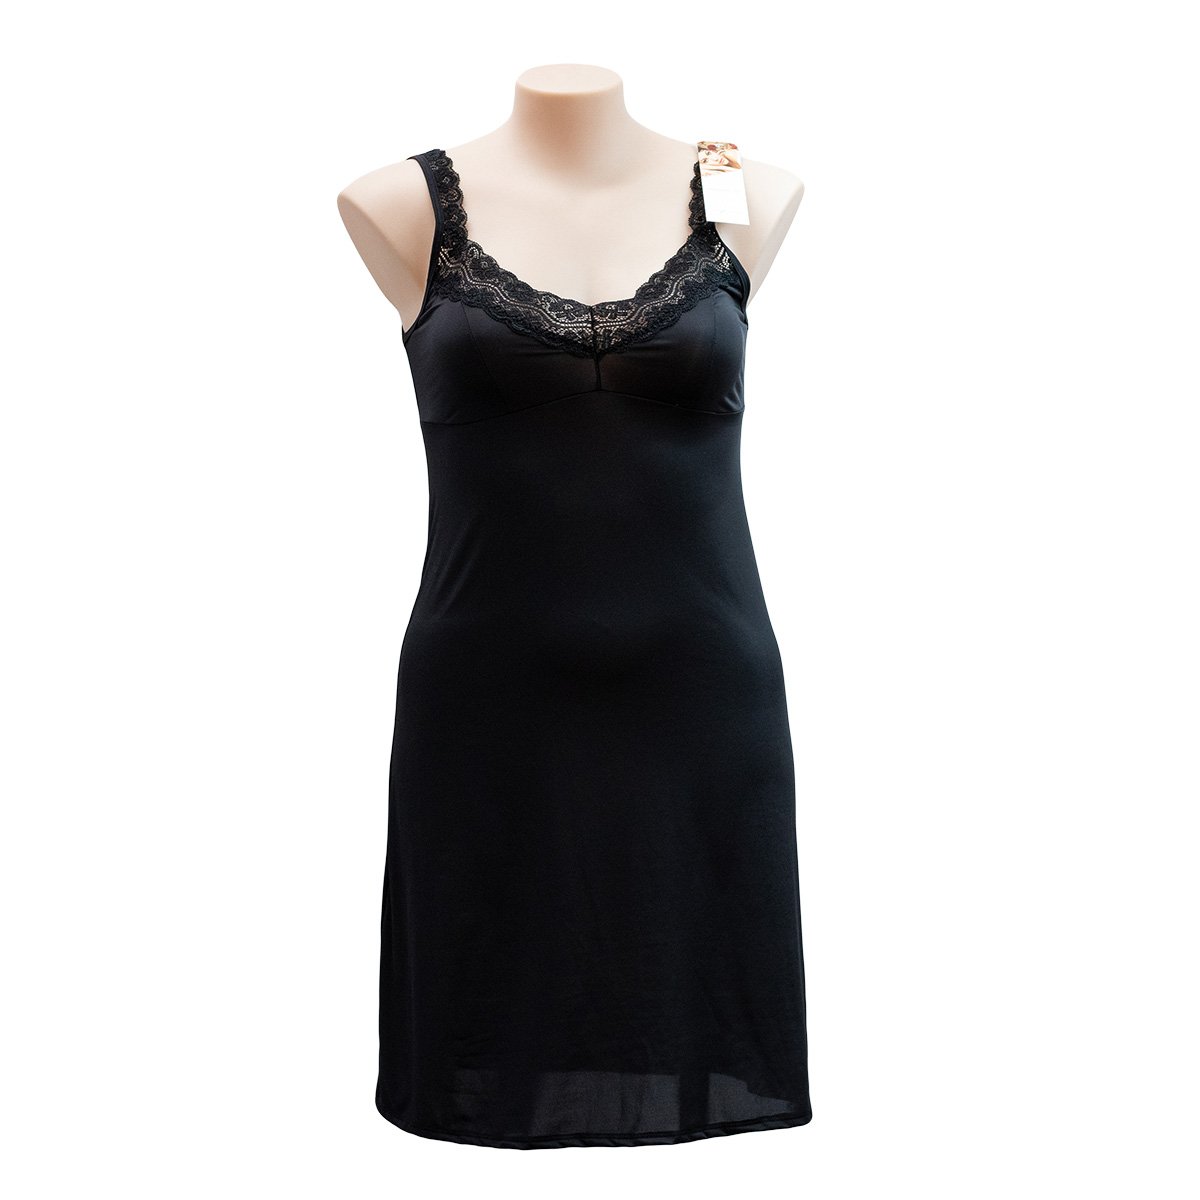 Essence Lace Trim Full Slip 936SL - Dresses & Slips Black / 10 / S  Available at Illusions Lingerie